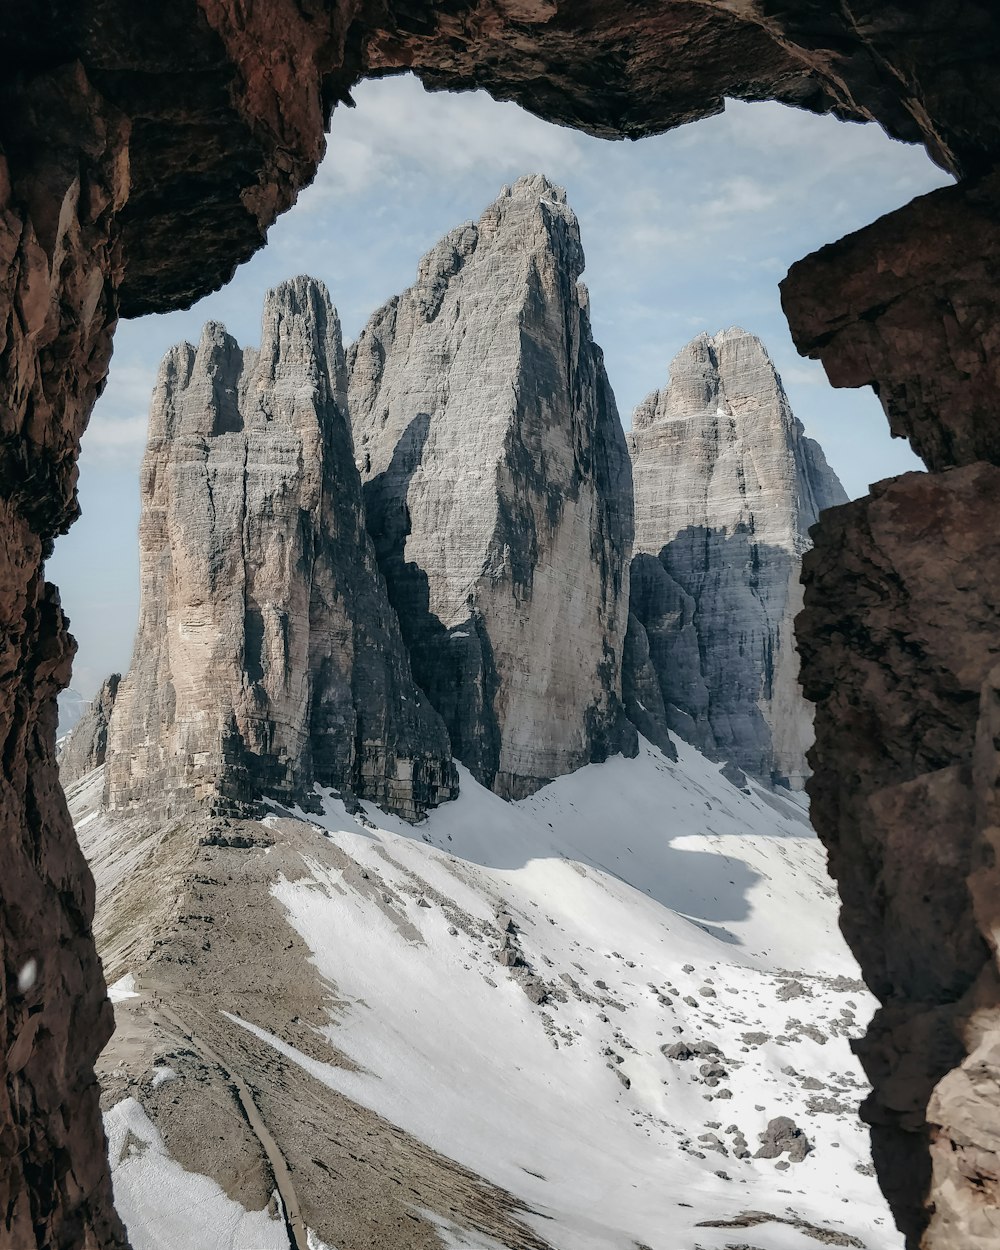 a view of a mountain range through a hole in a rock